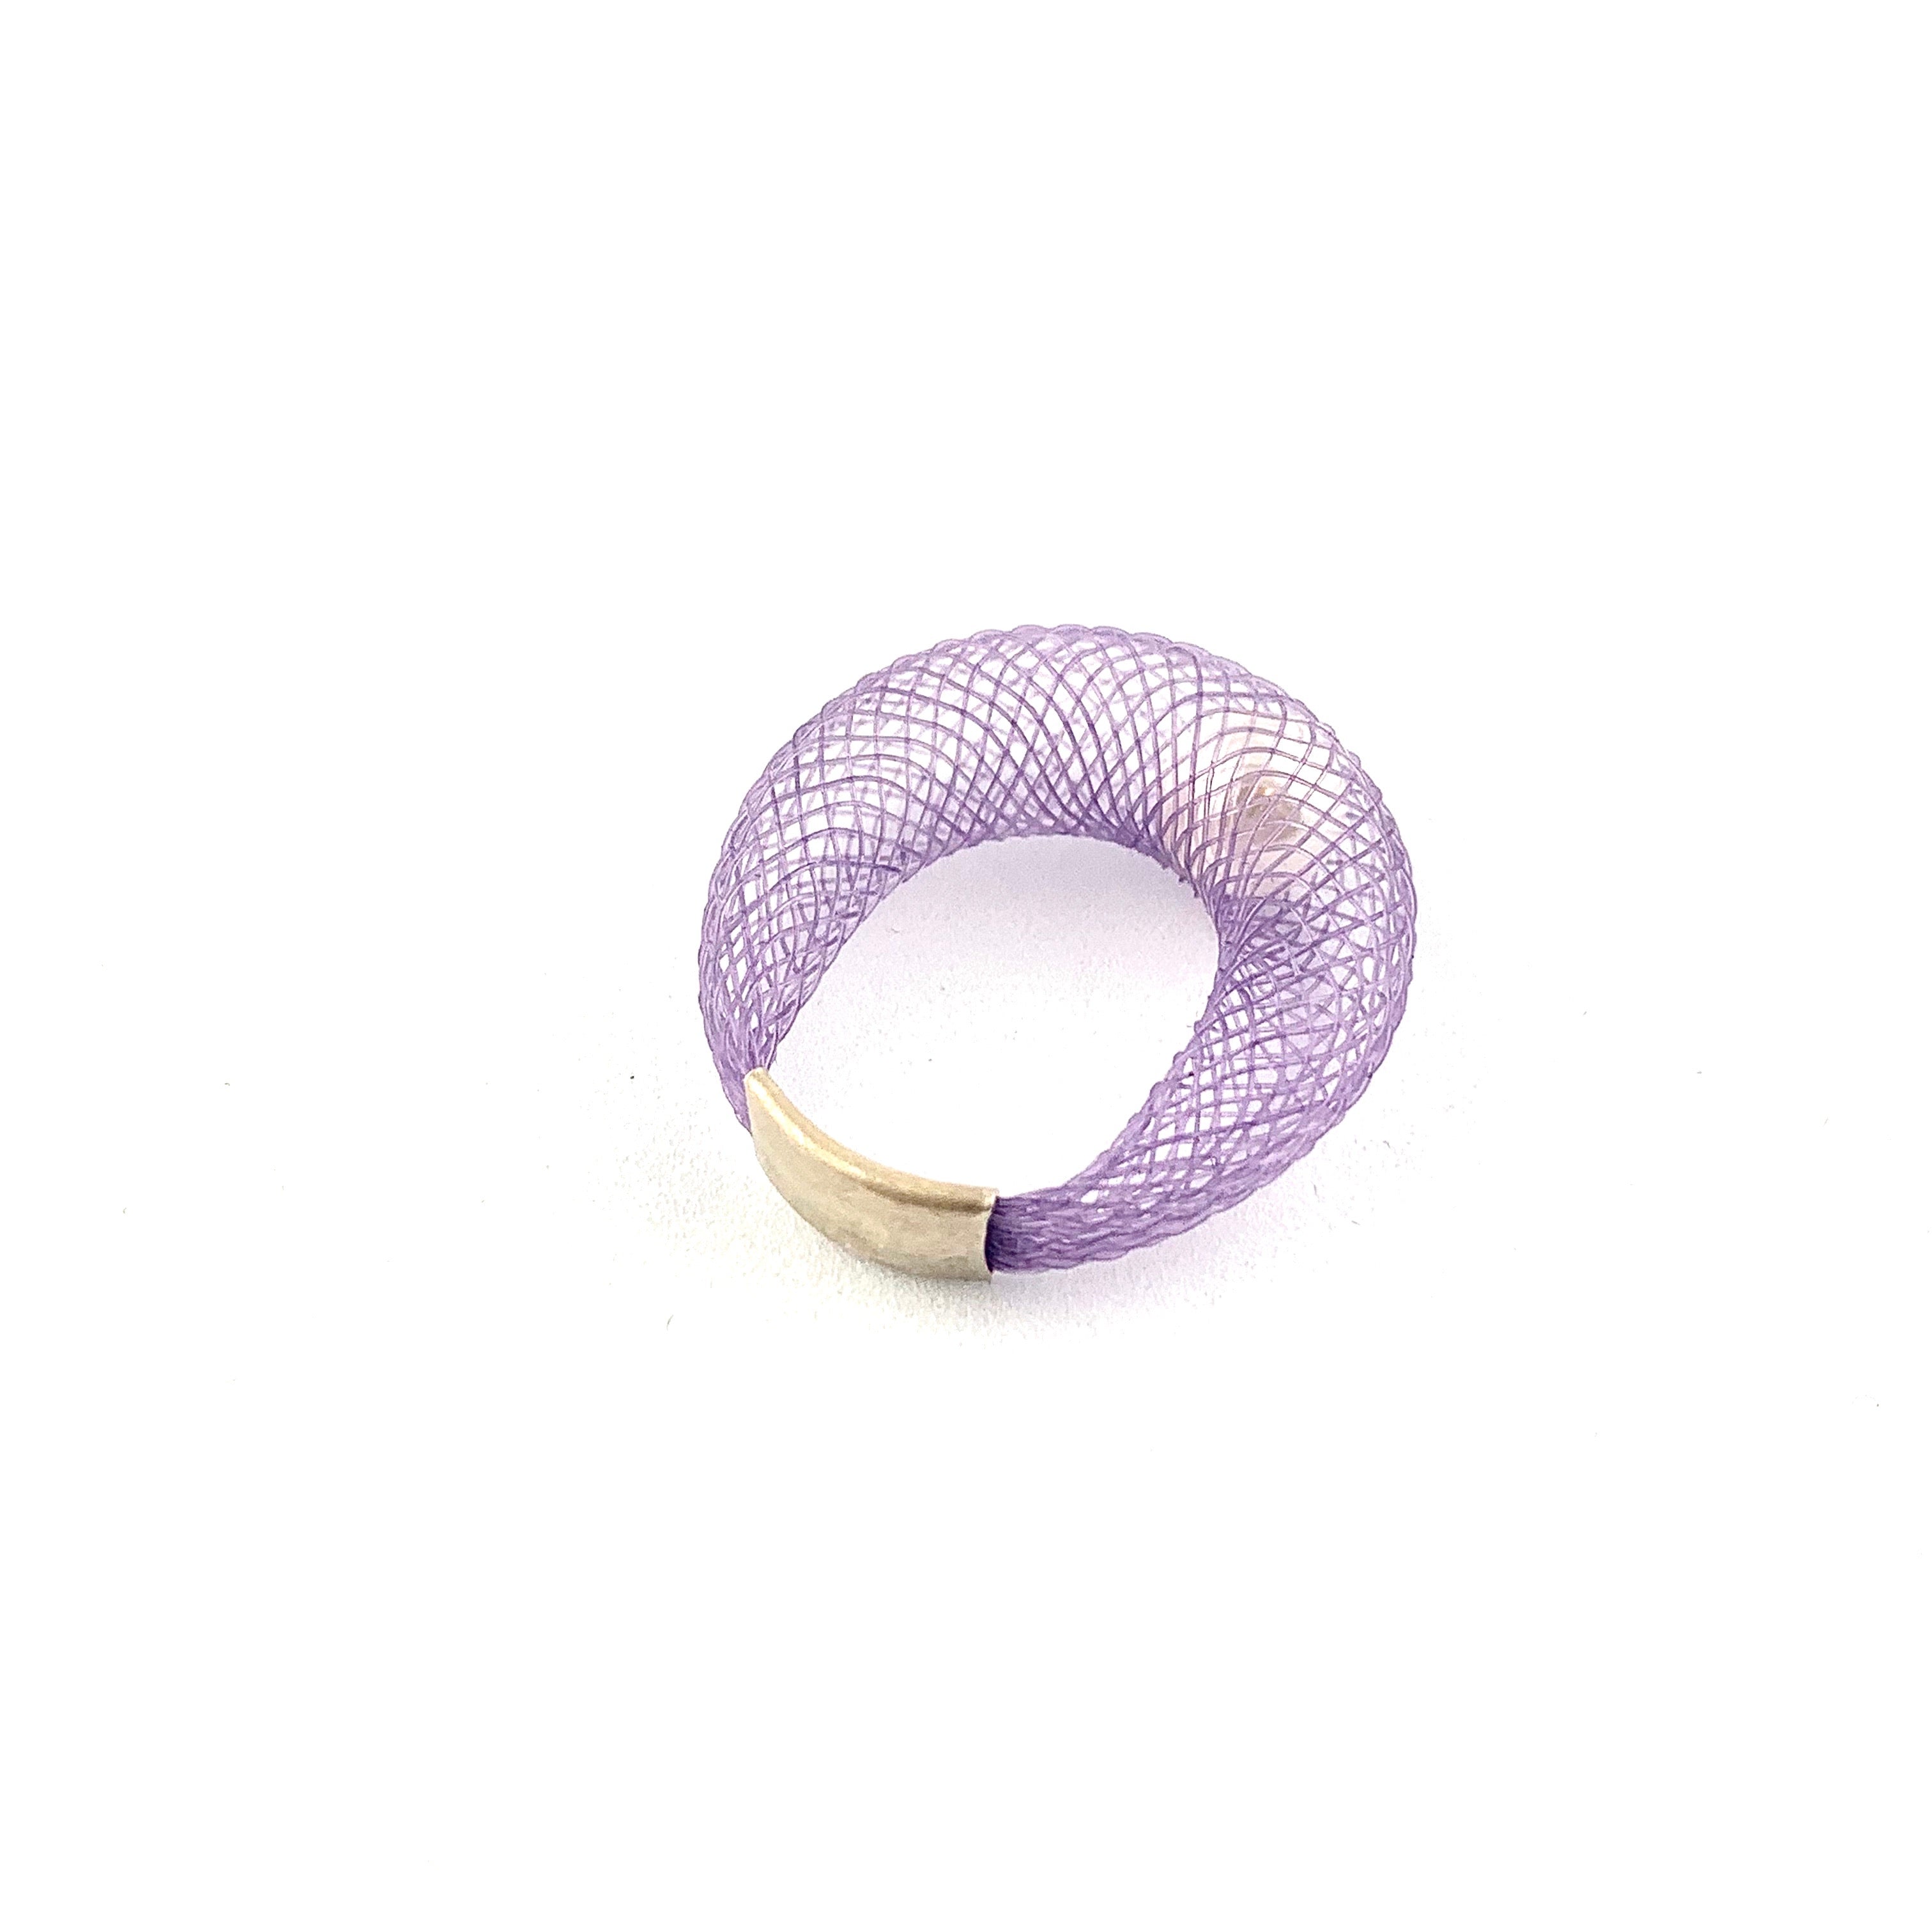 Dyed Nylon Faux White Pearl Ring